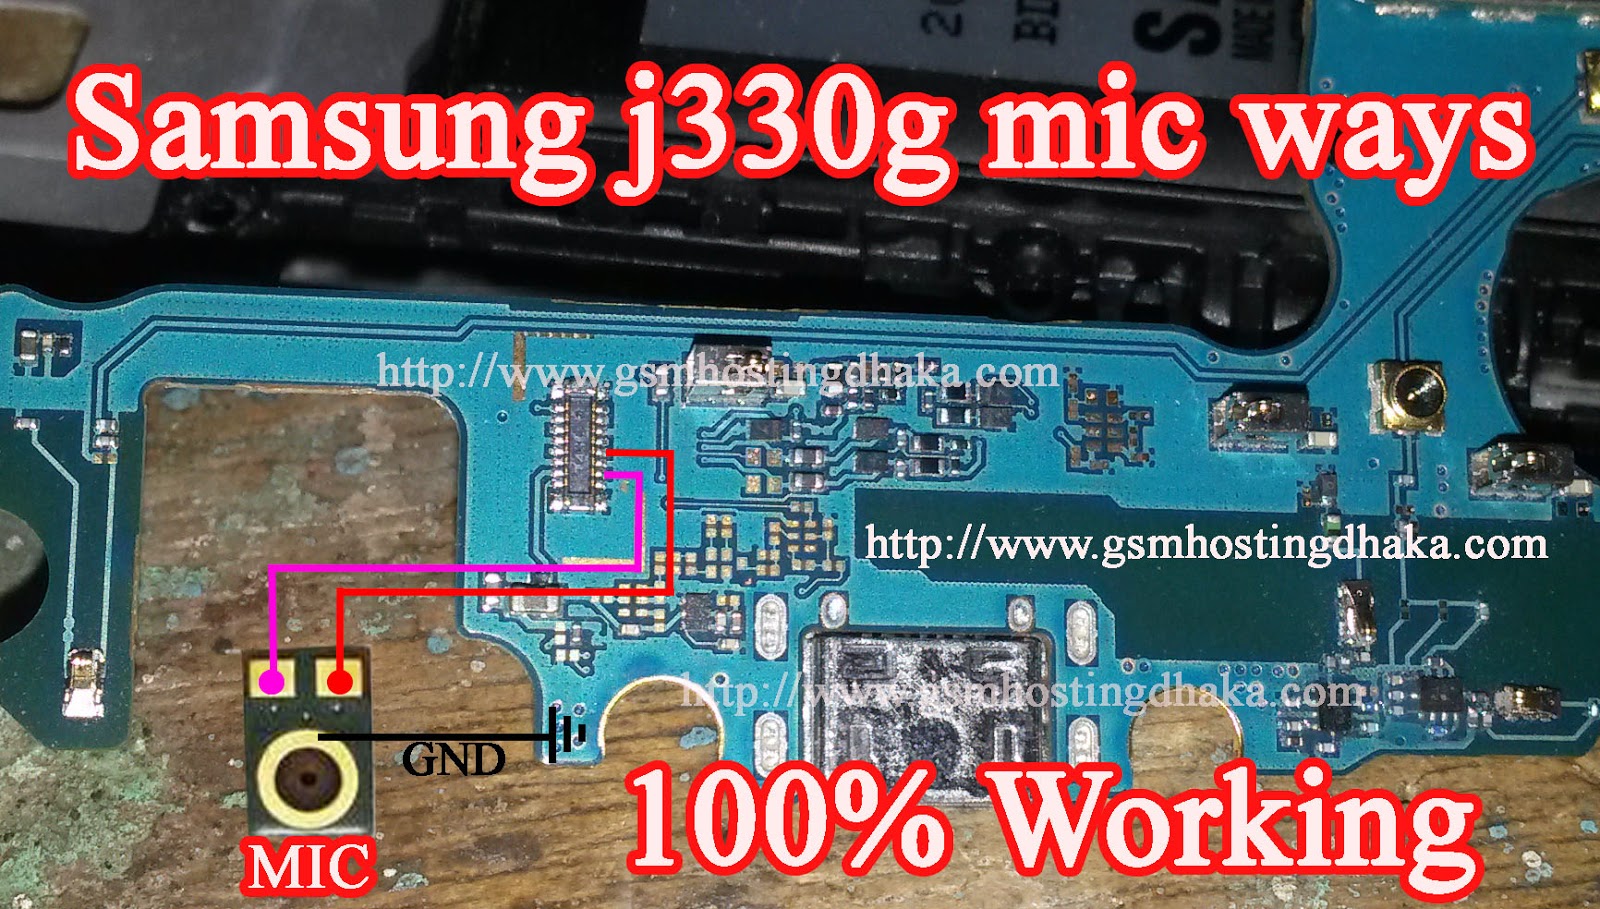 Samsung J3 Pro J330g Mic Ways 100 Working Frimwer